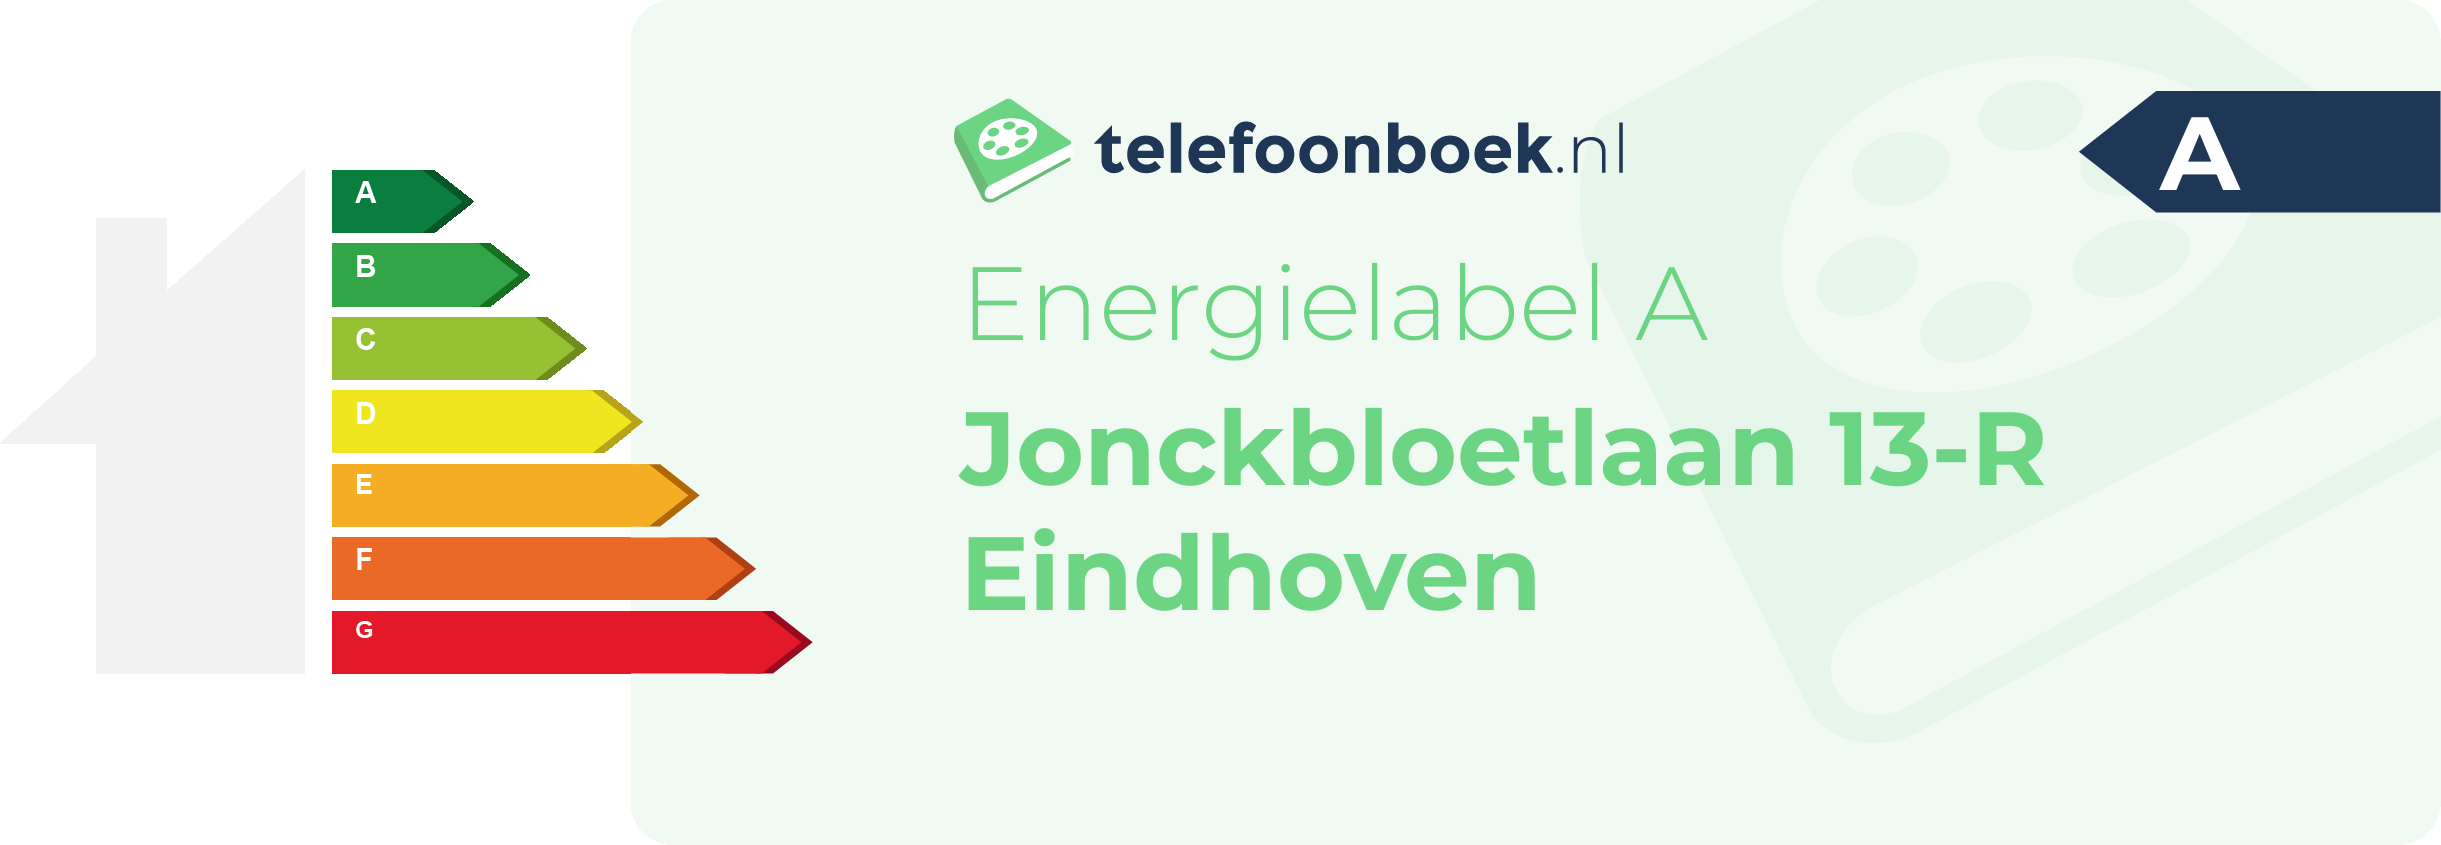 Energielabel Jonckbloetlaan 13-R Eindhoven